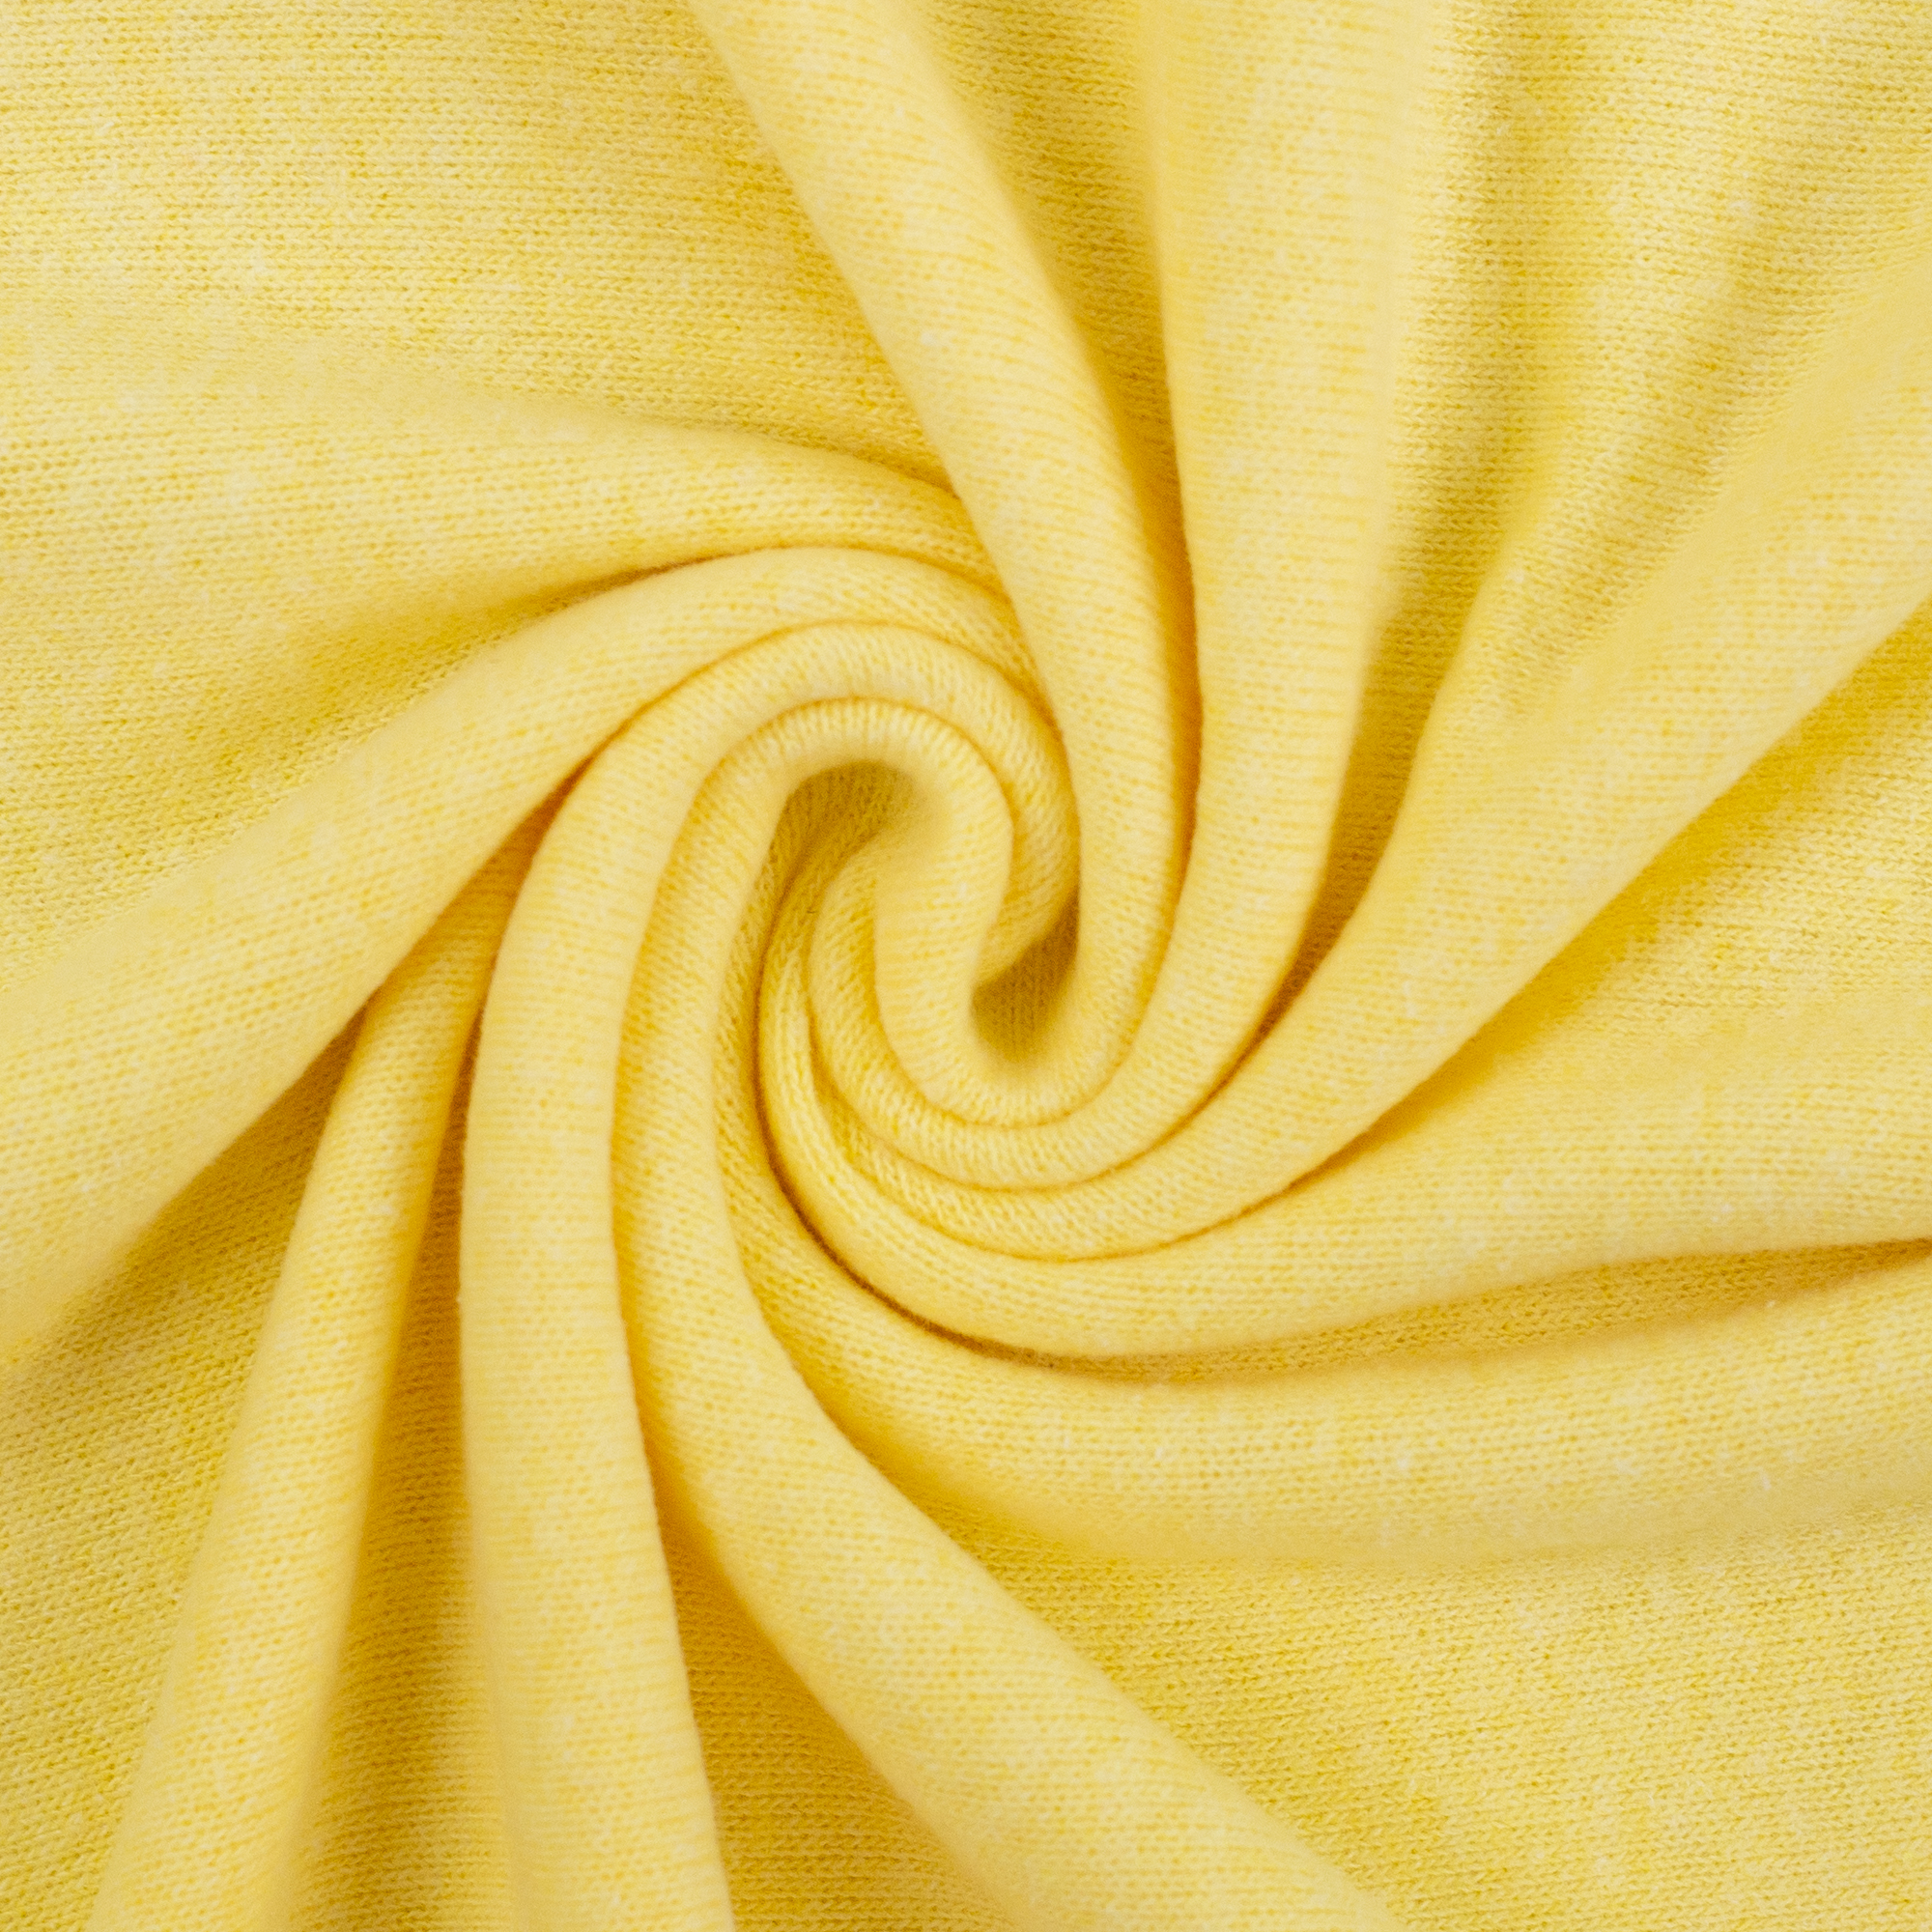 Strickstoff Bene gelb, angerauht, Made in Italy